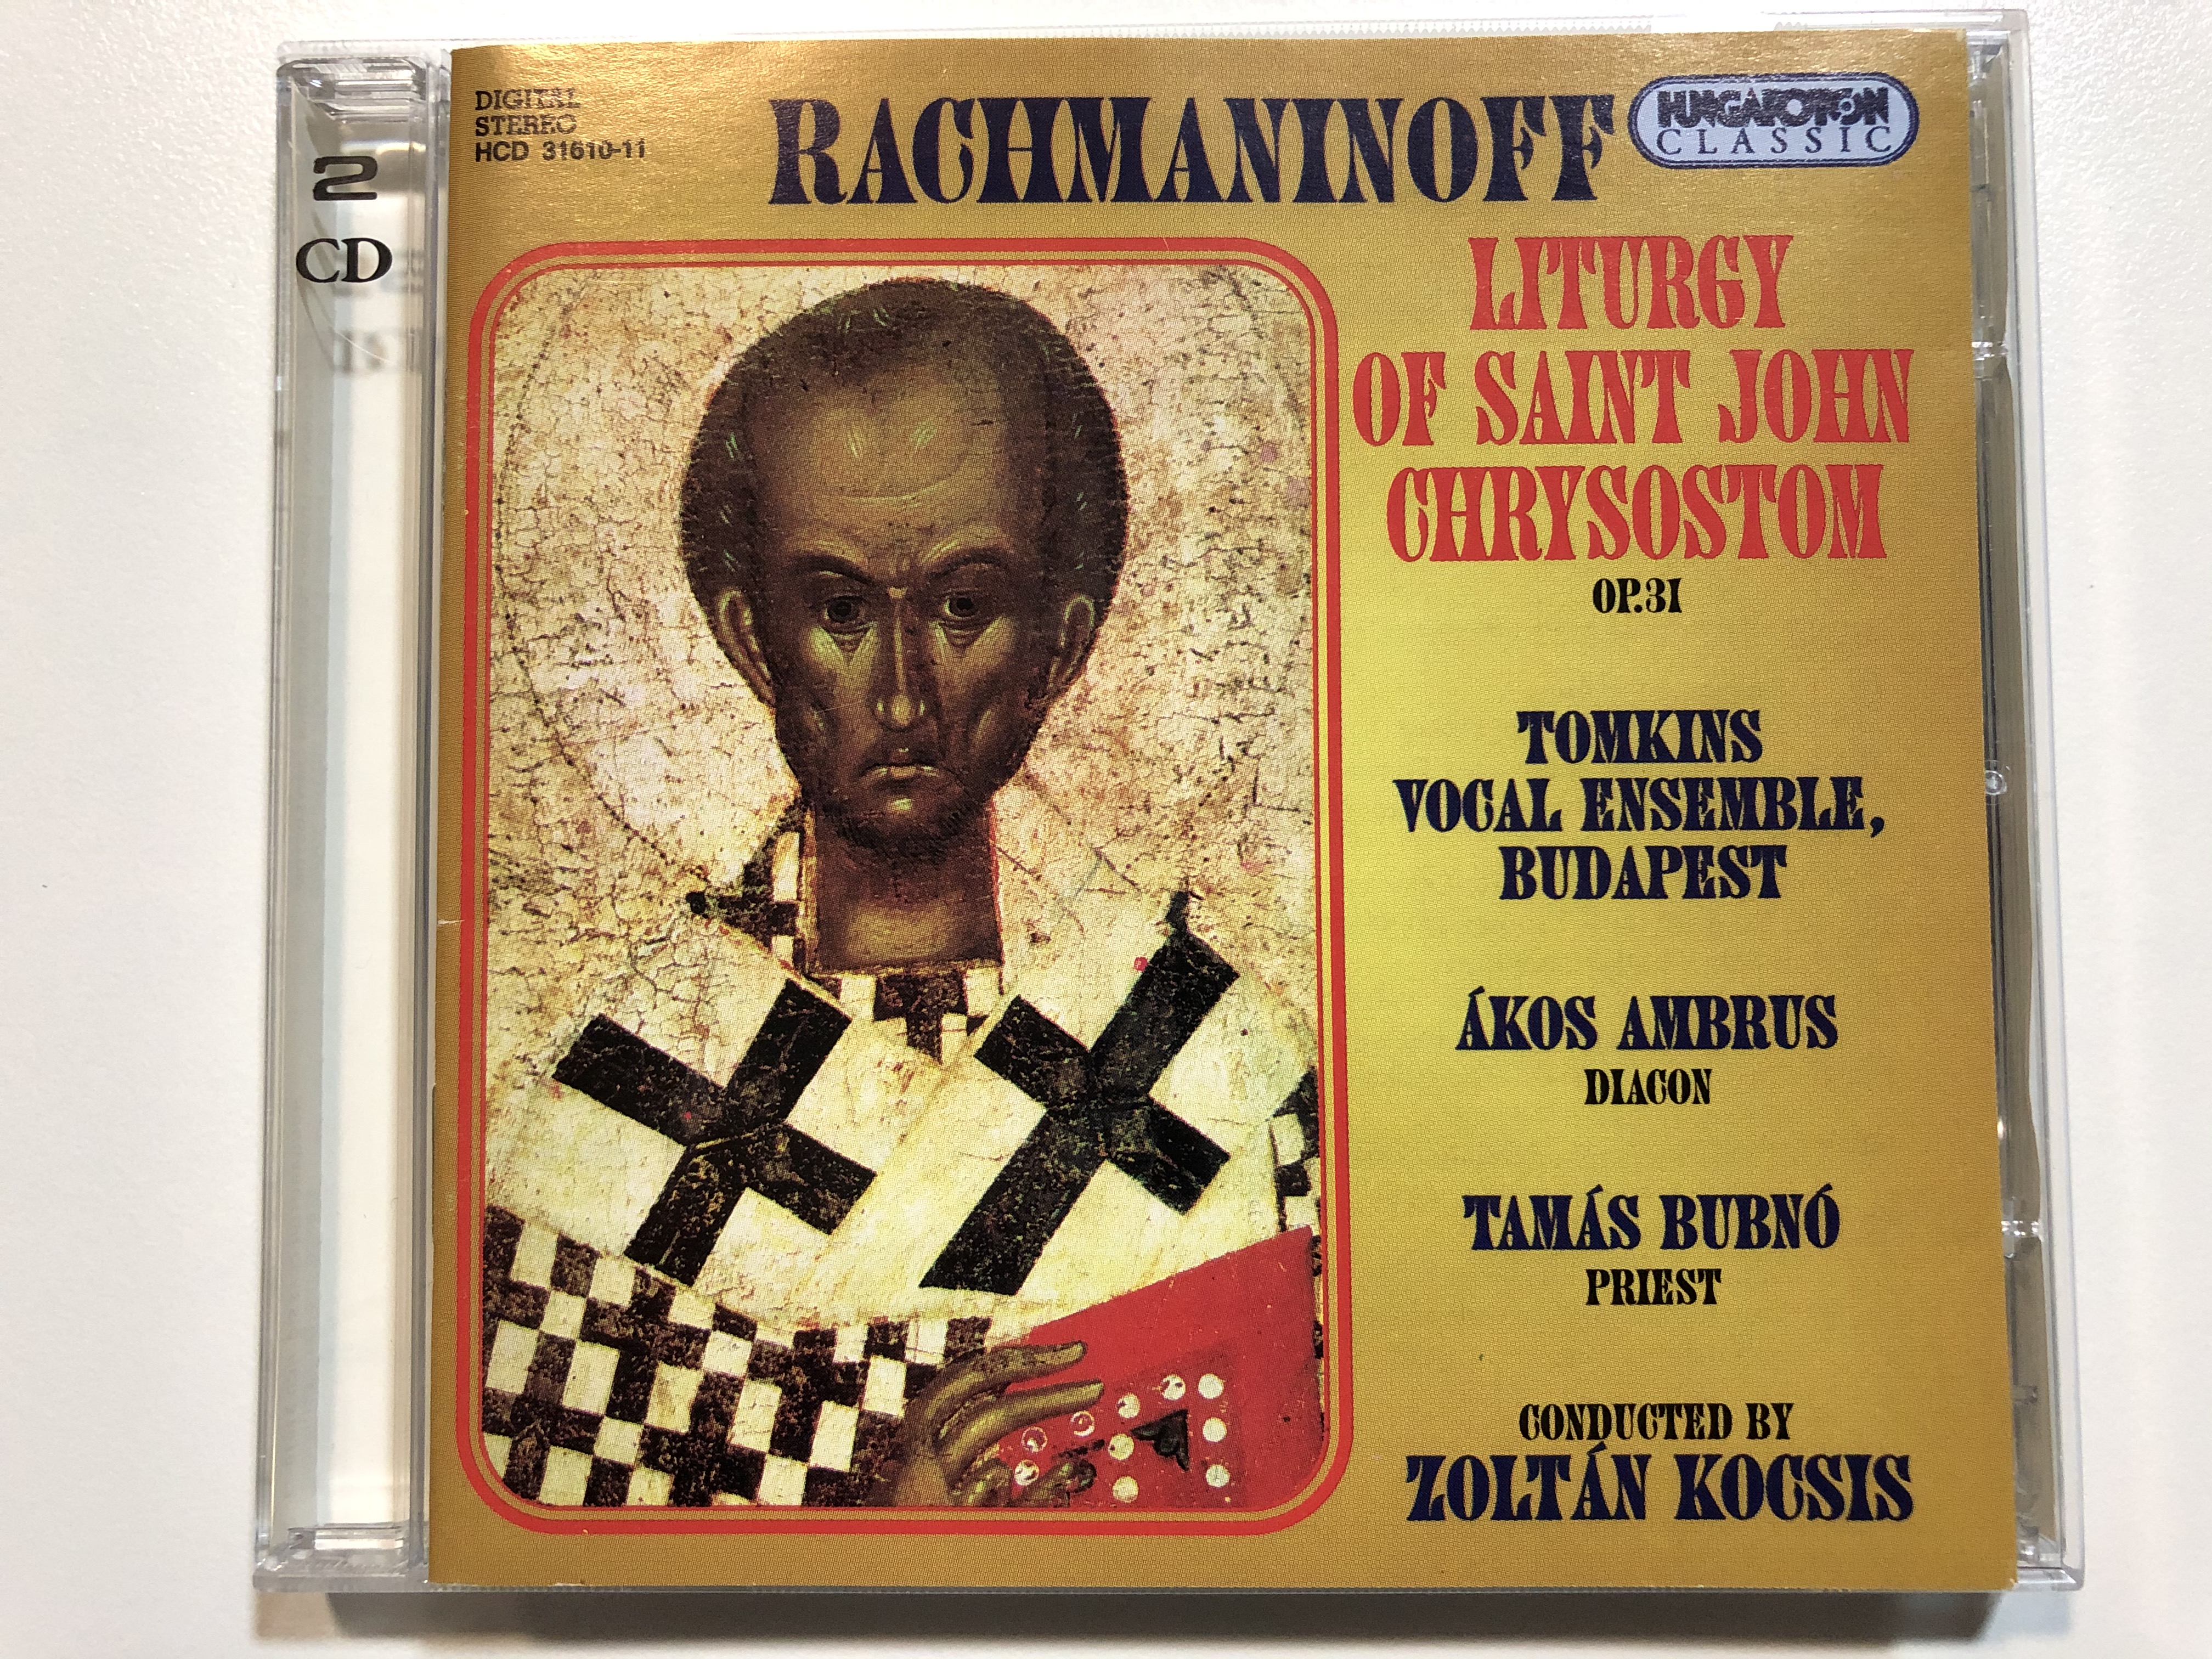 rachmaninoff-liturgy-of-saint-john-chrysostom-op.-31-tomkins-vocal-ensemble-budapest-akos-ambrus-diagon-tamas-bubno-priest-conducted-by-zoltan-kocsis-hungaroton-classic-2x-audio-1-.jpg